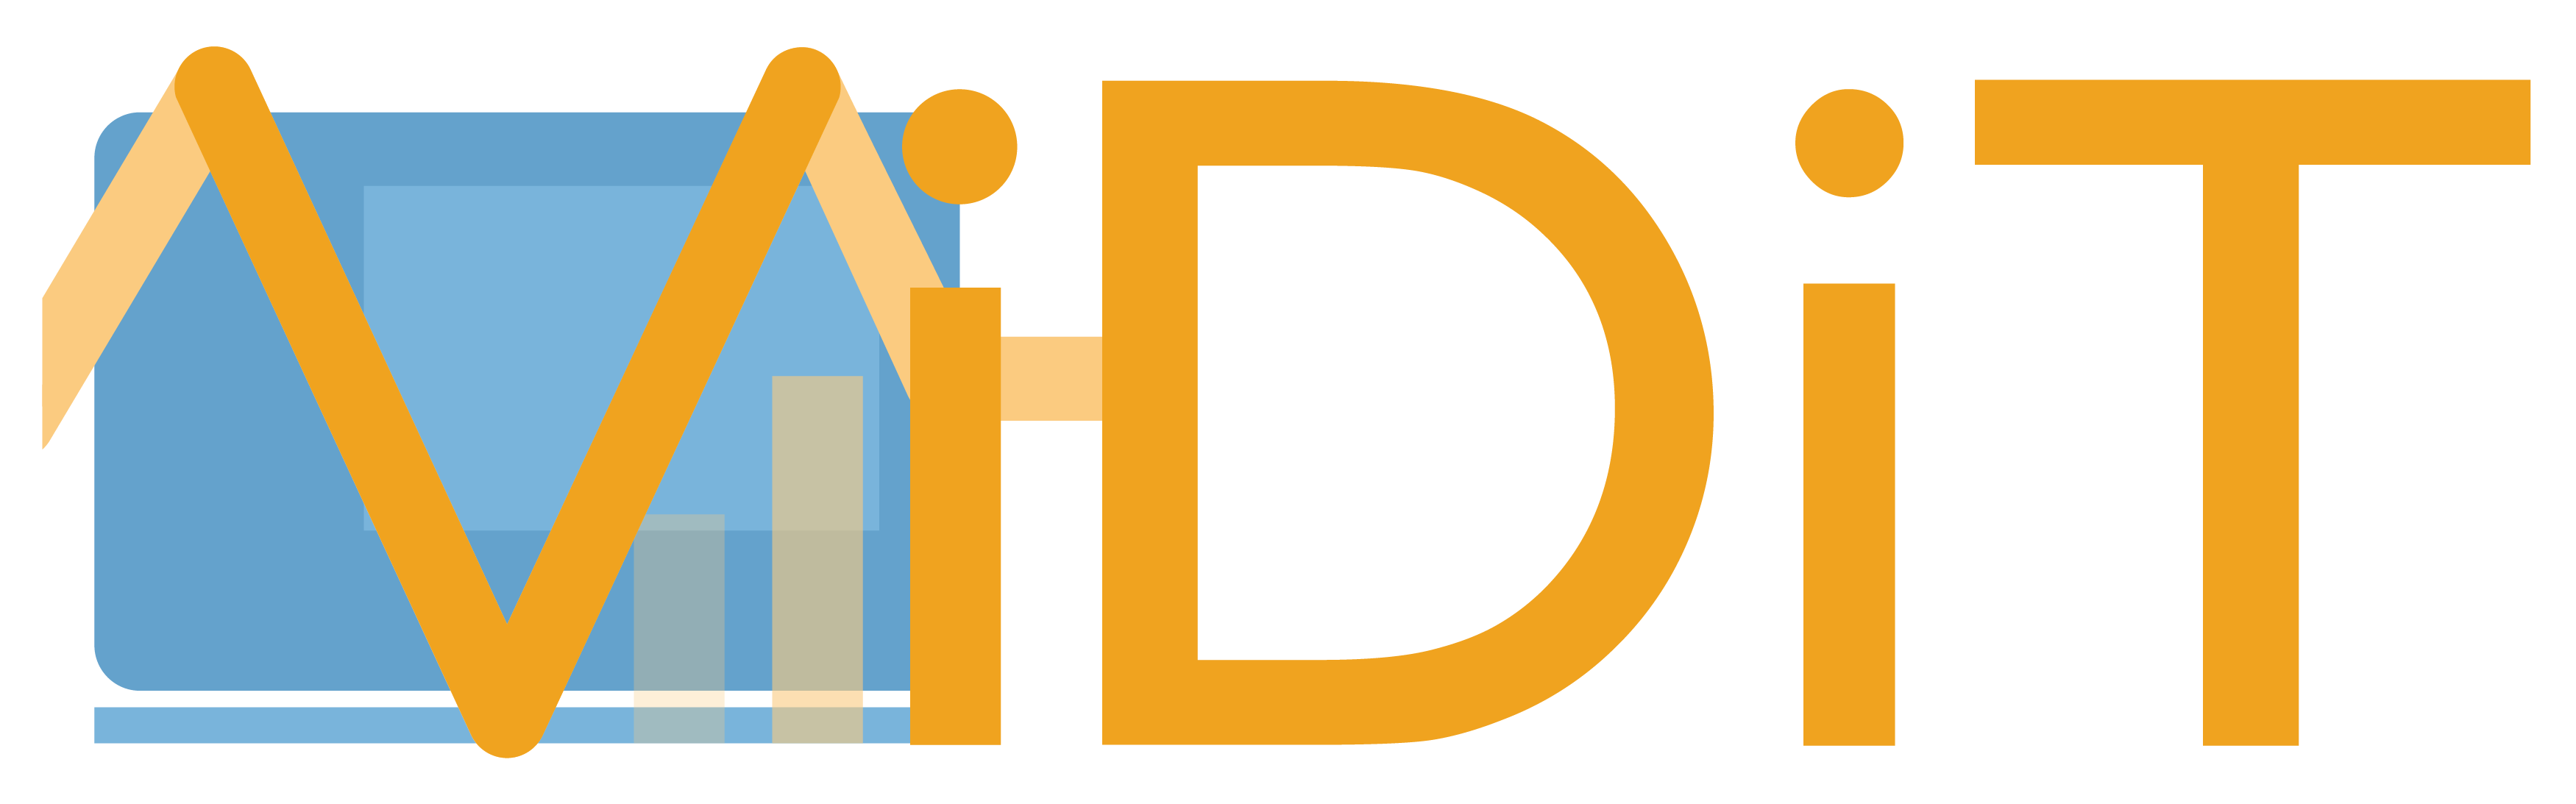 ViDiT logo